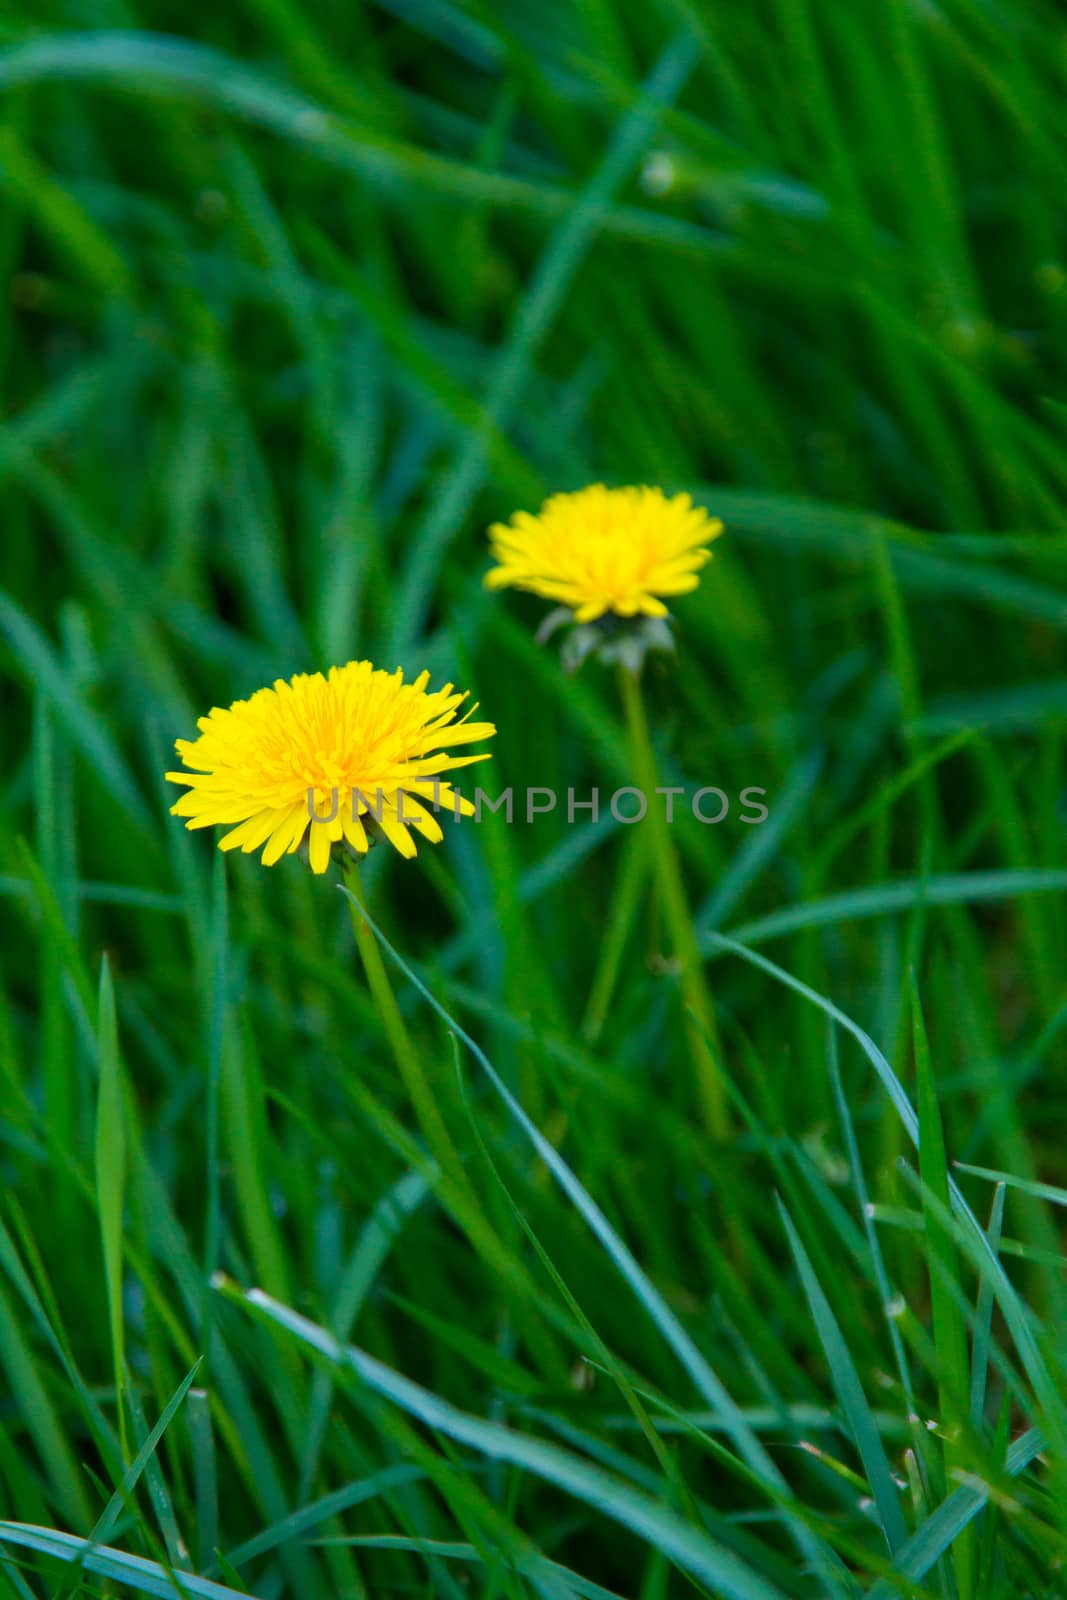 Dandelion Flowers in Grass by joshuaraineyphotography